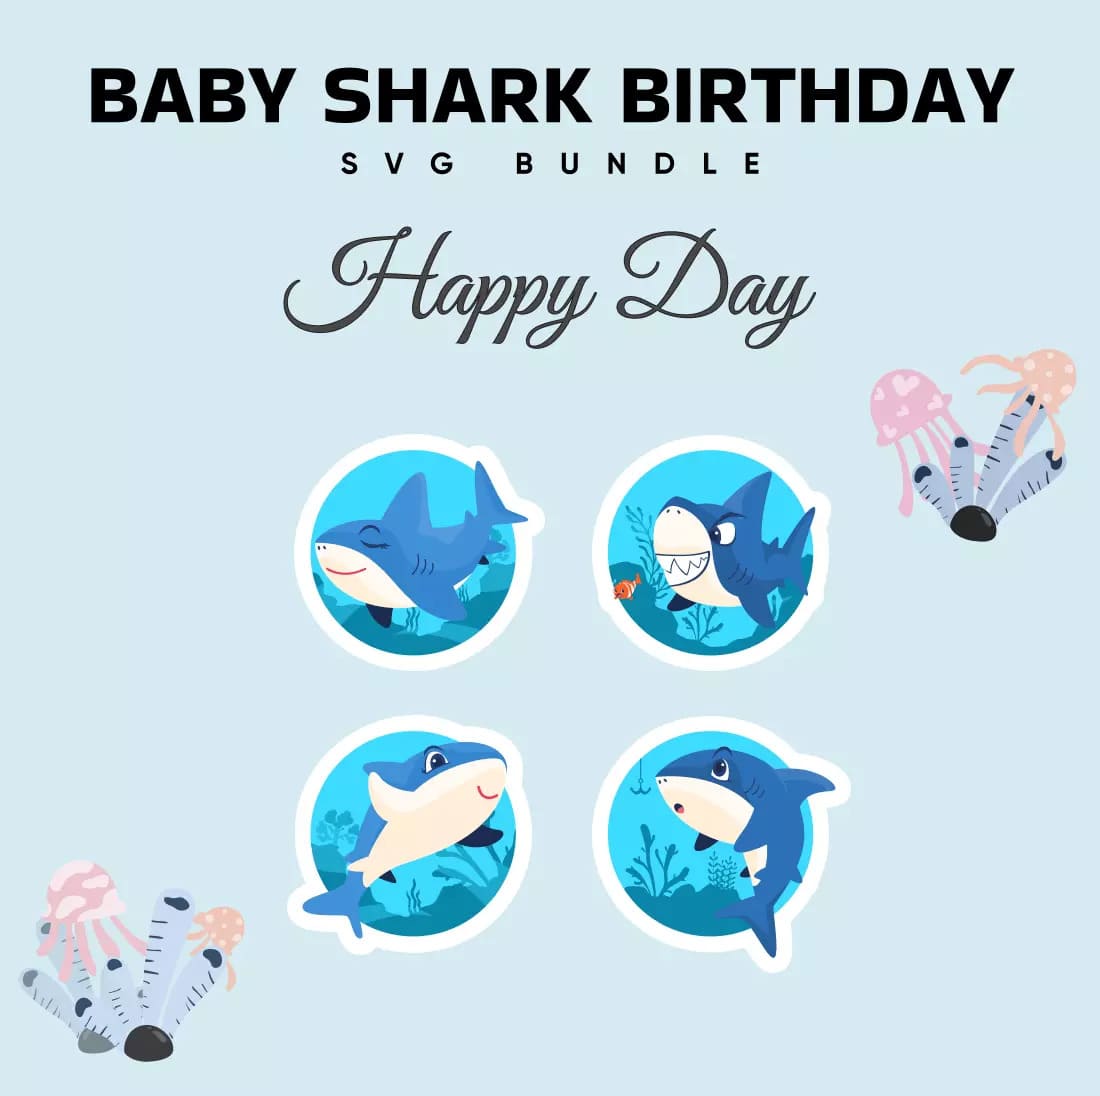 Baby shark birthday svg bundle.